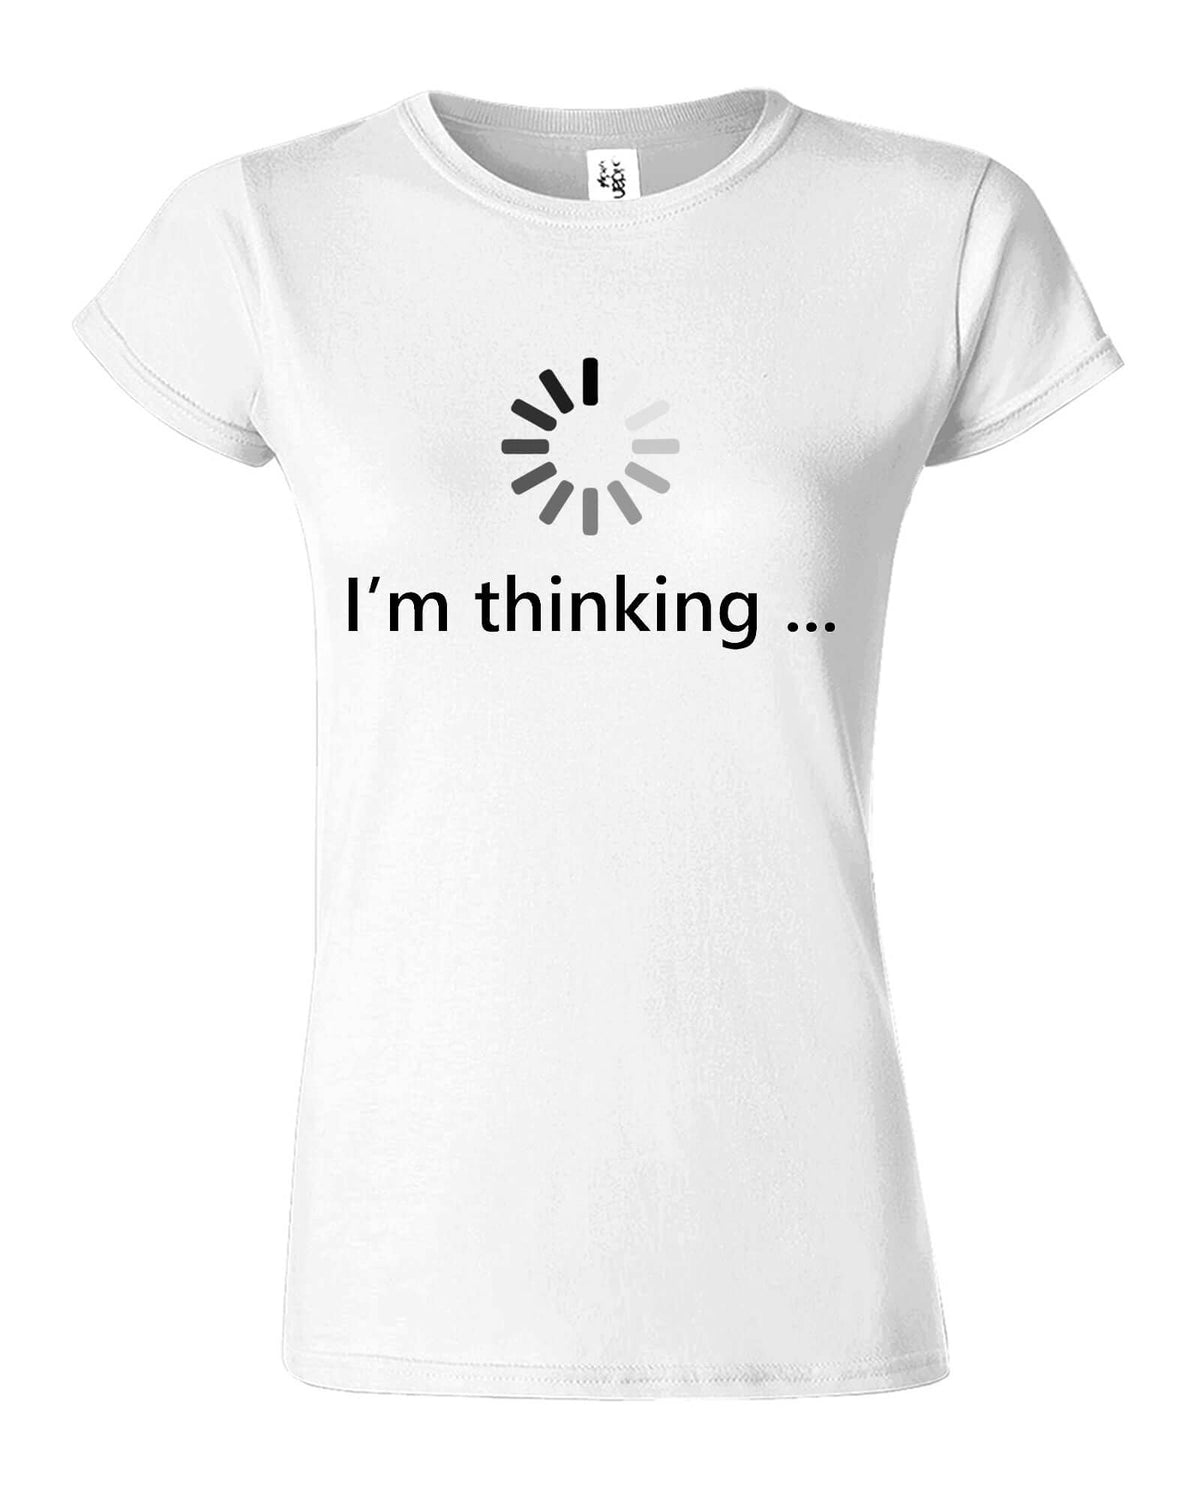 I Am Thinking Funny Womens T-Shirt